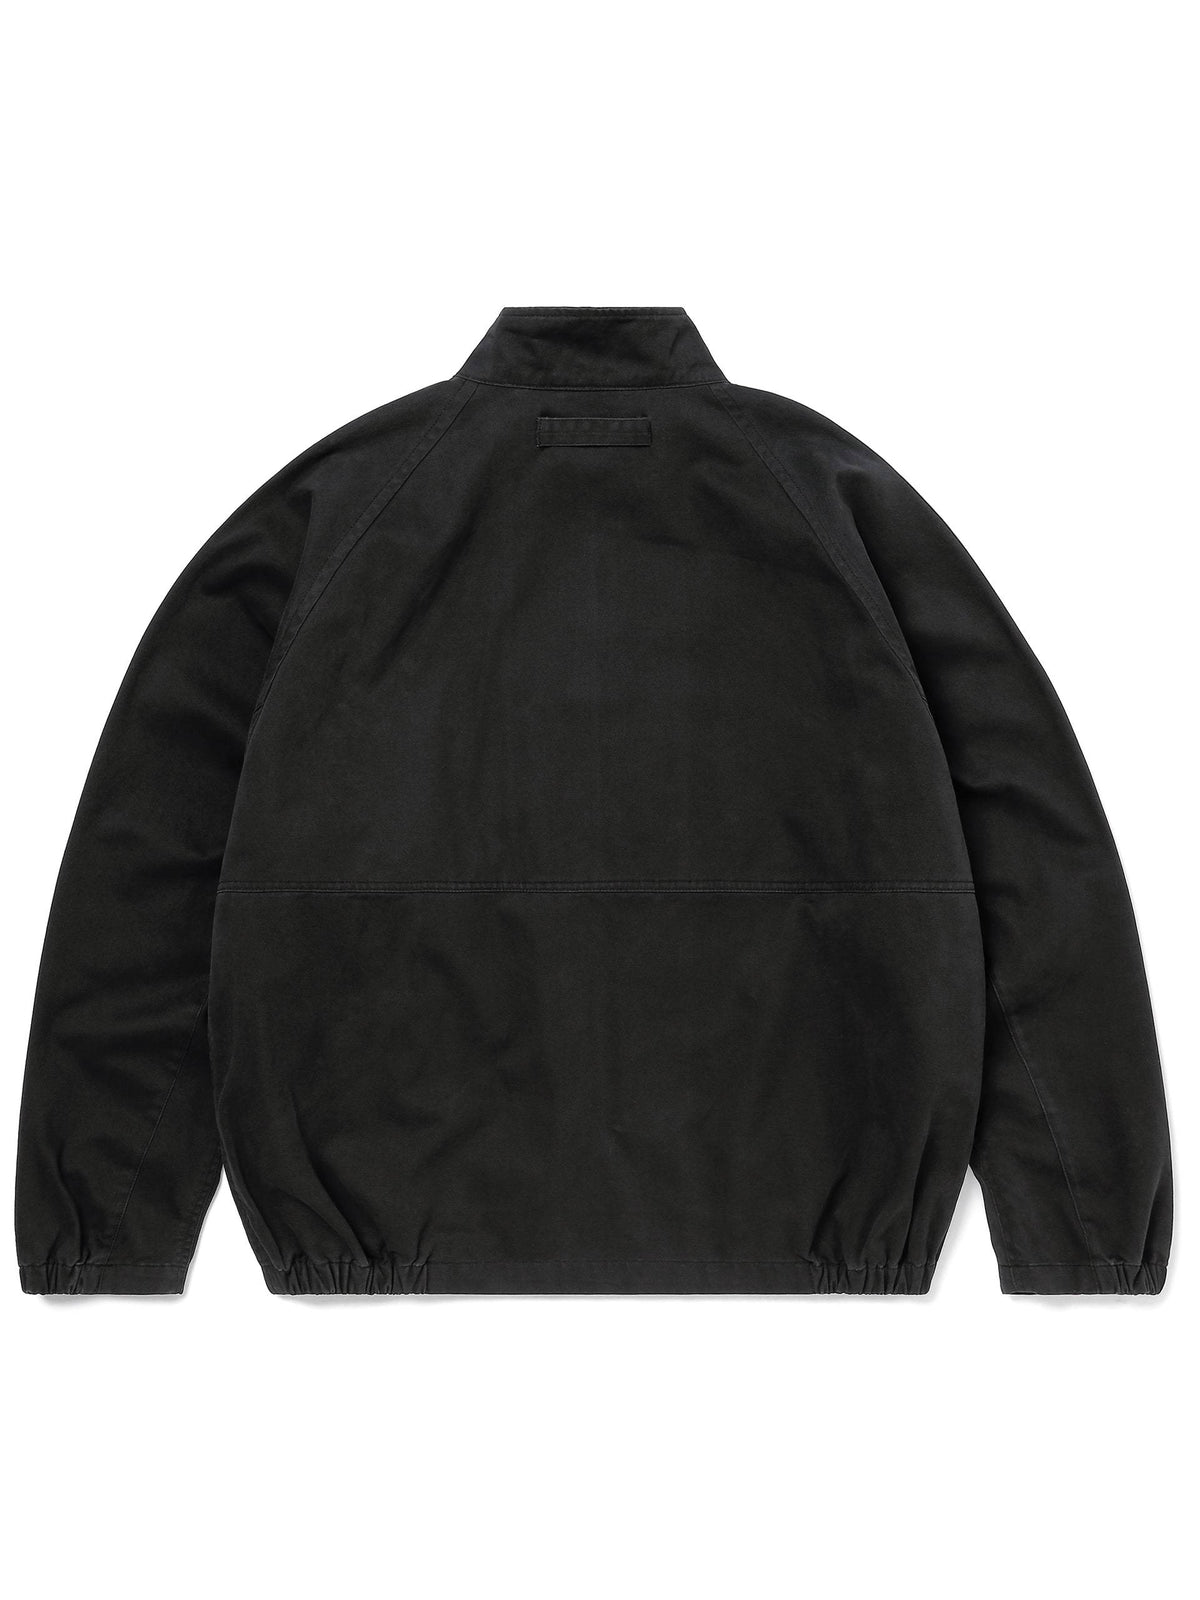 Raglan Zip Jacket Outerwear 